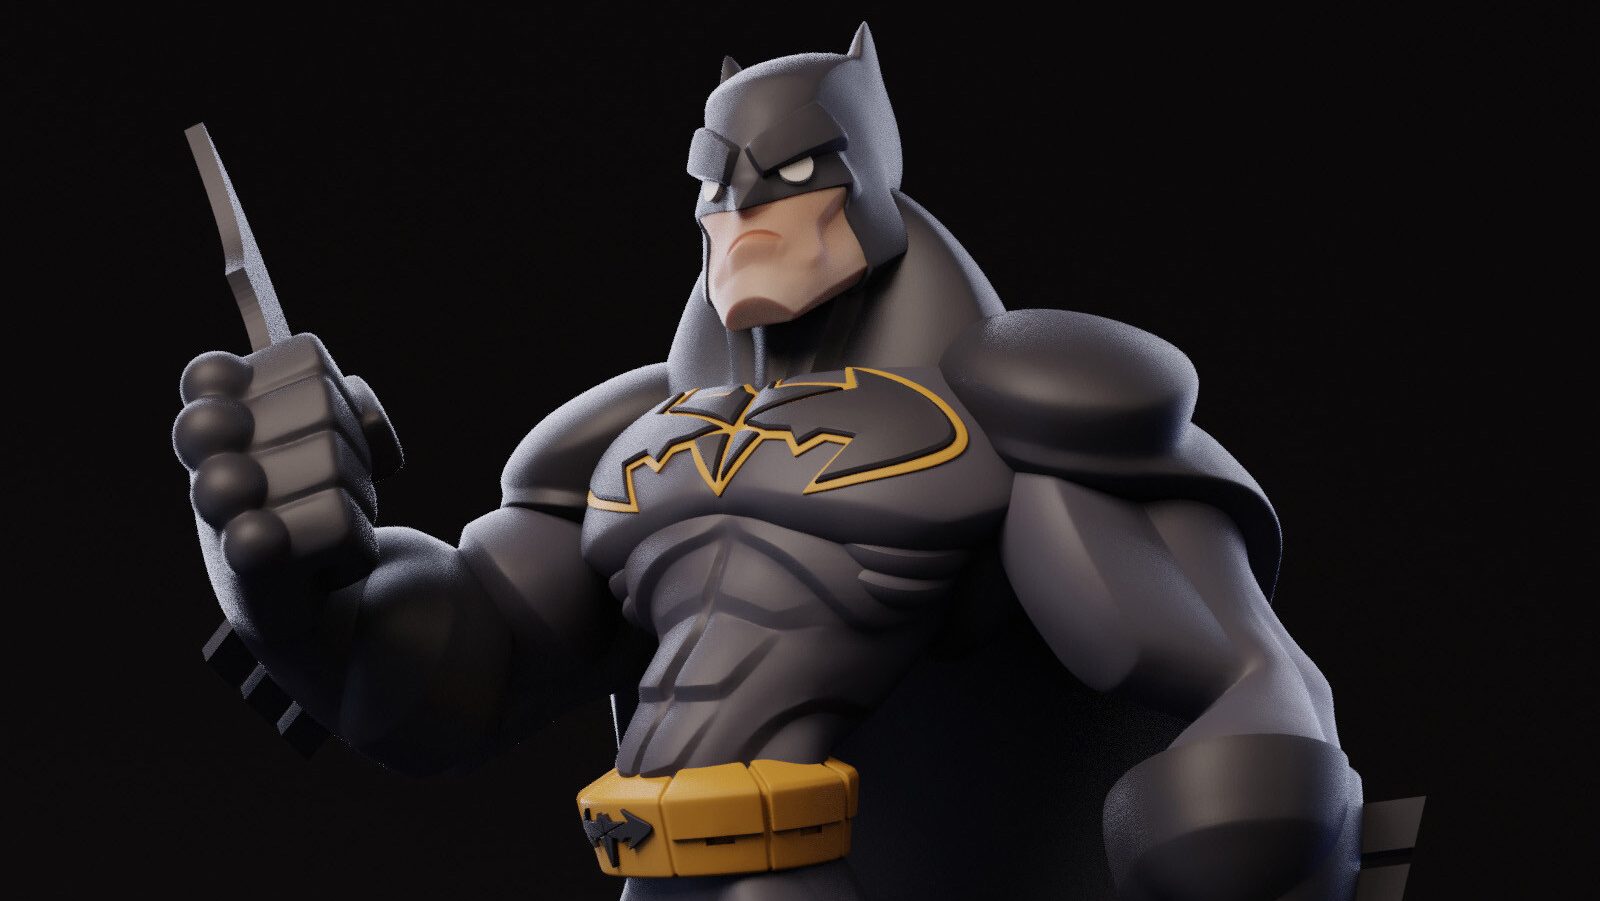 Batman sculpt by Brandon Lyon for Mana Studios. Design by Tracy Tubera.